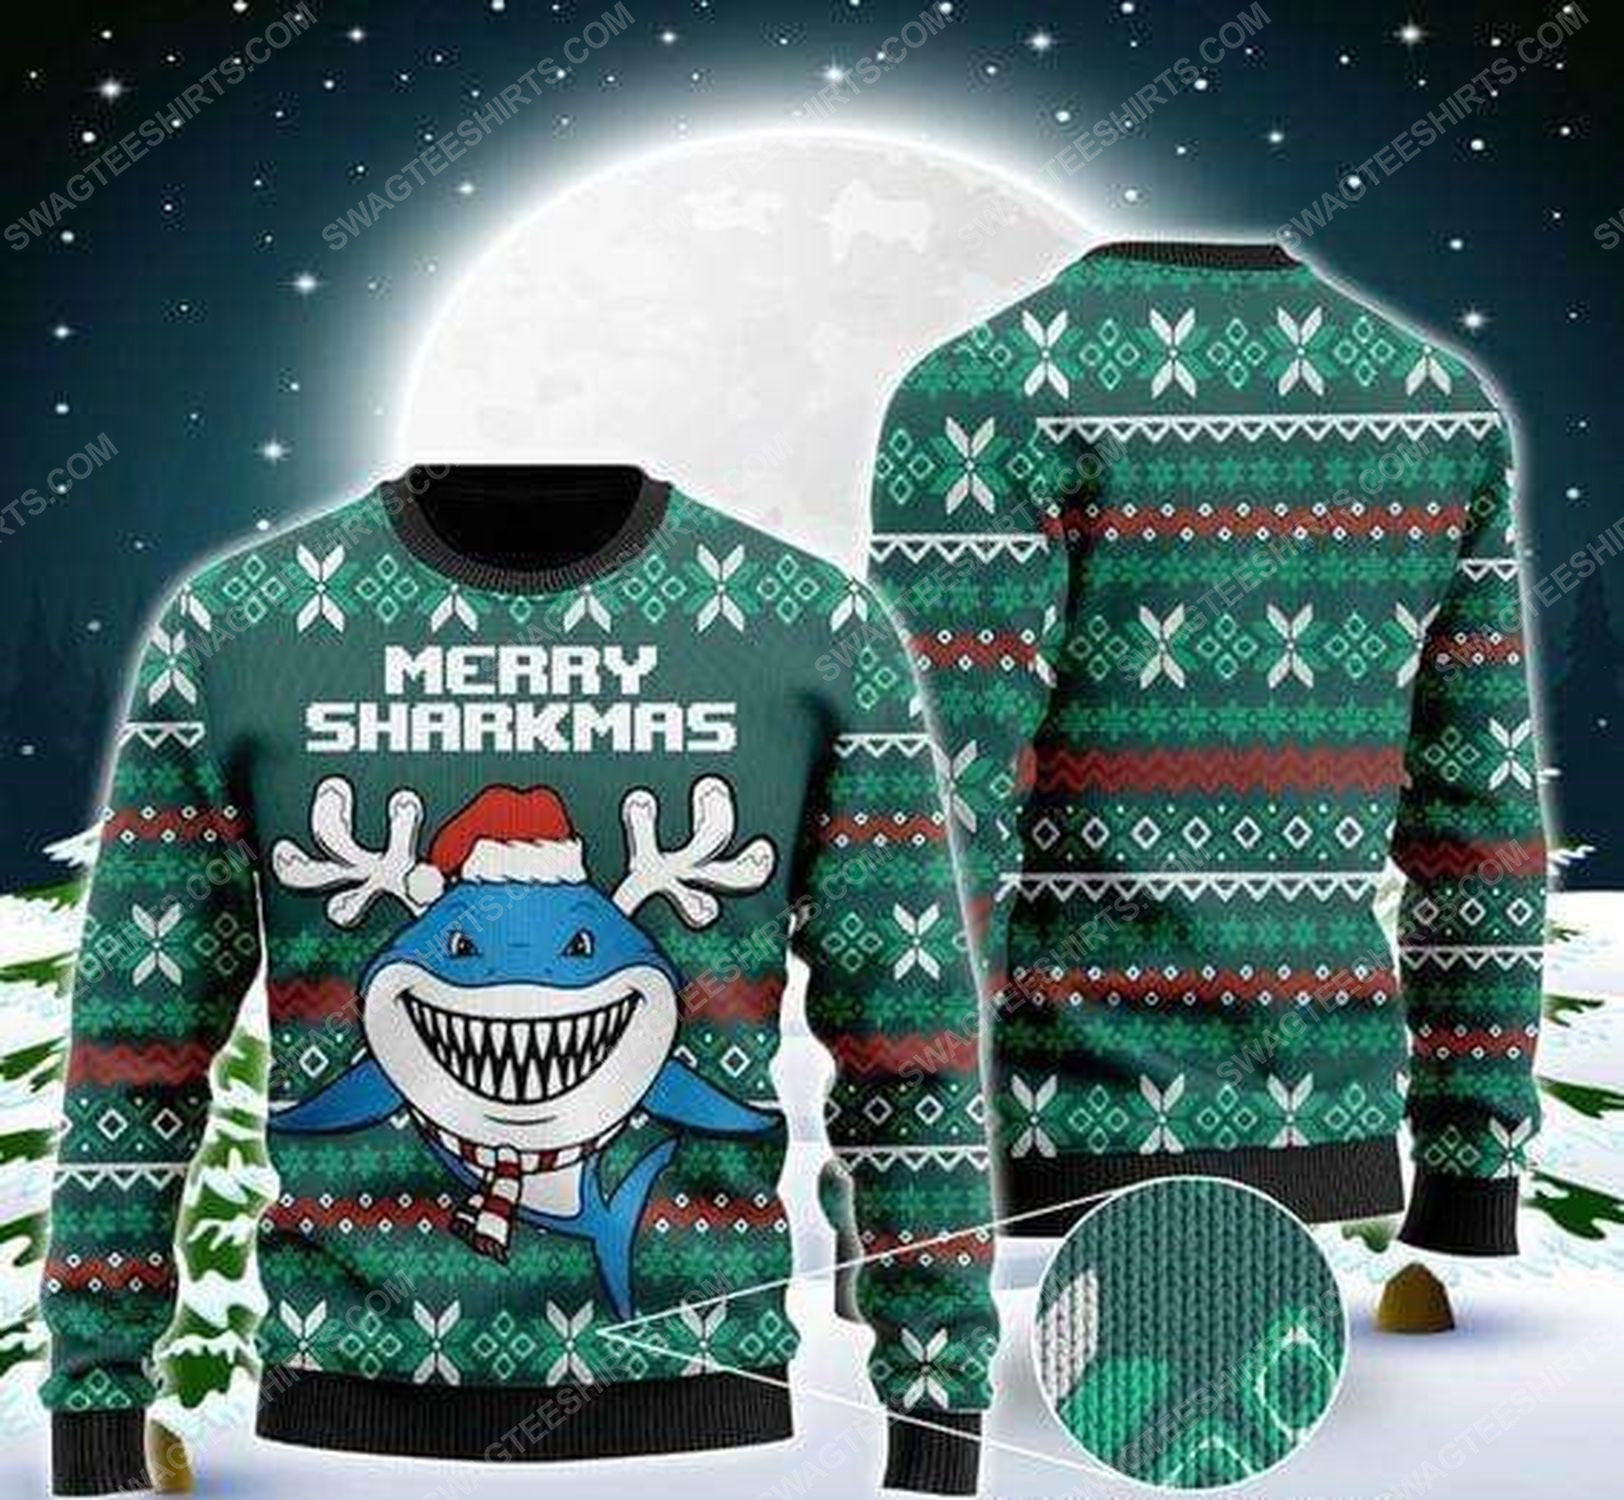 Merry sharkmas all over print ugly christmas sweater 1 - Copy - Copy